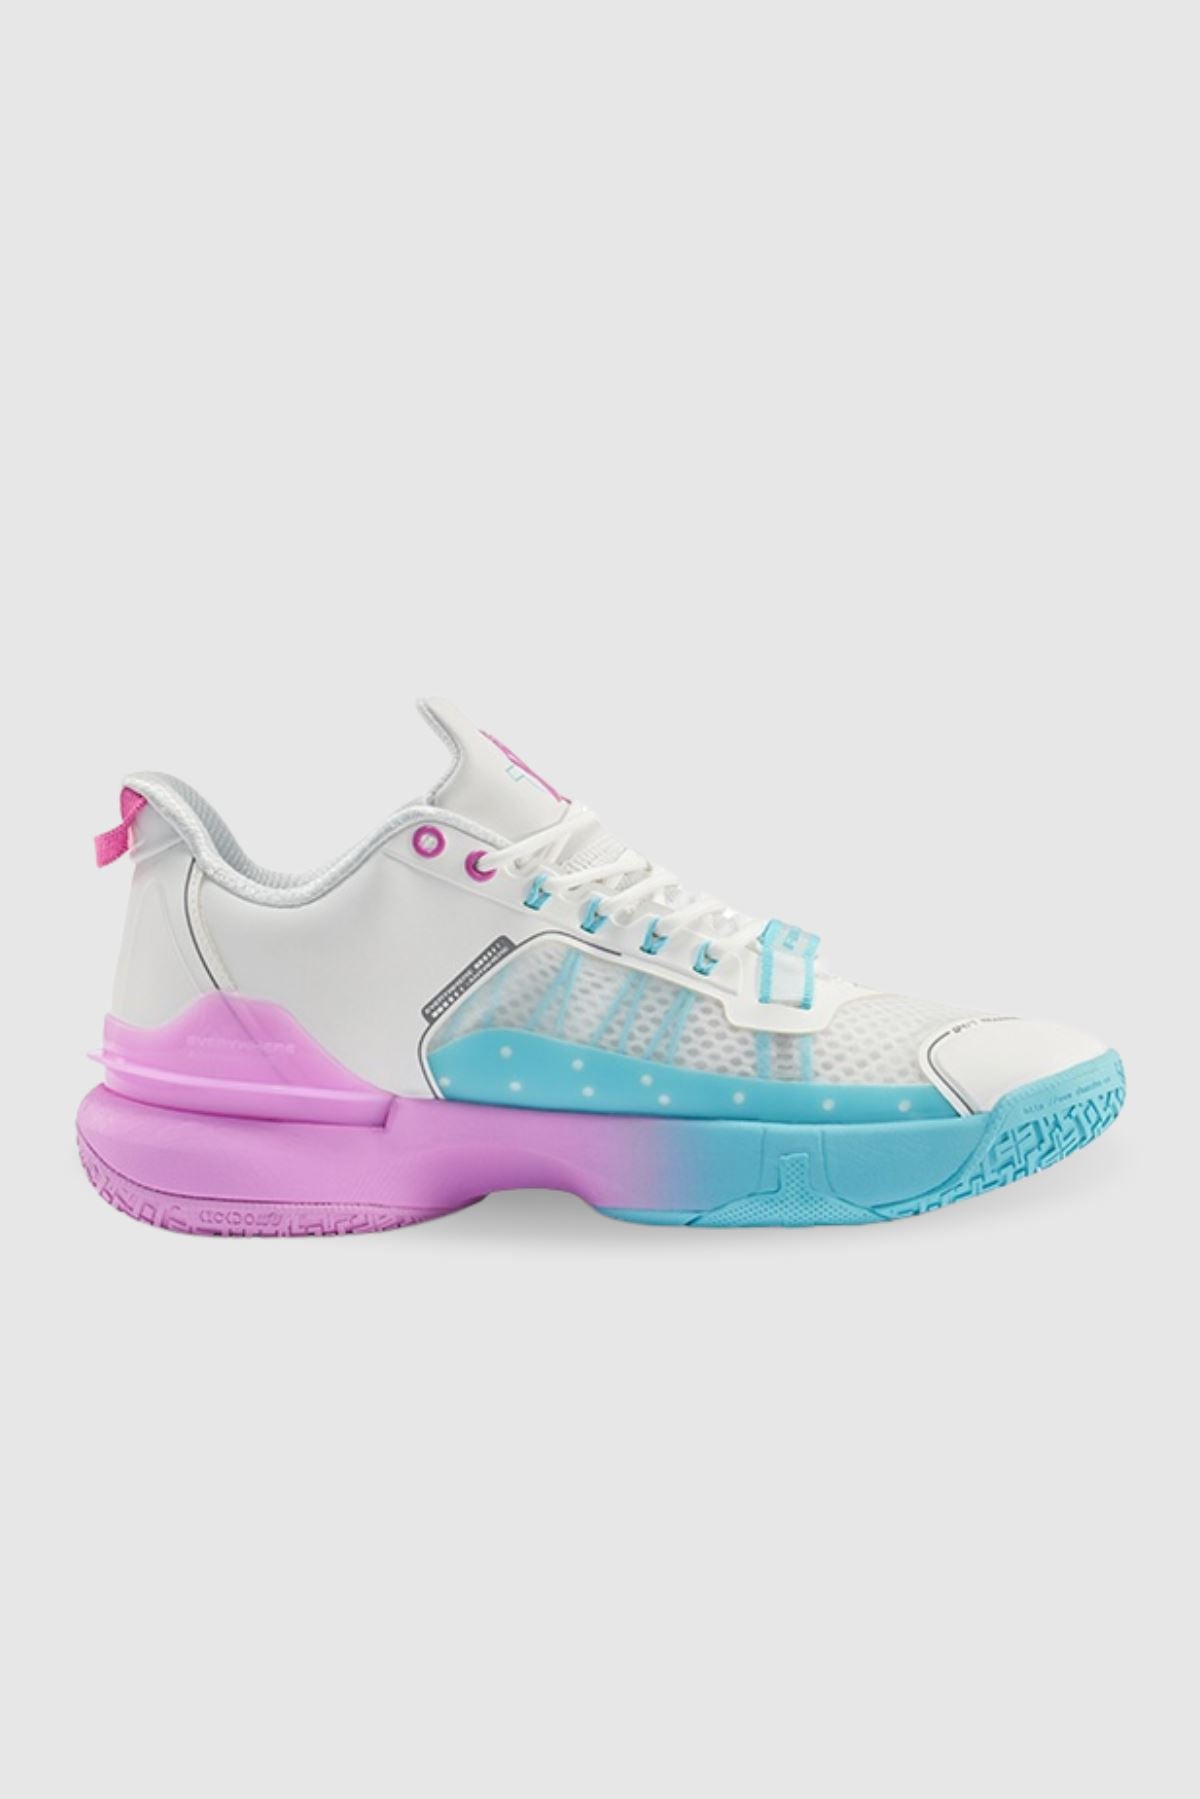 "Air Sac" Basketball Shoes Rigorer 